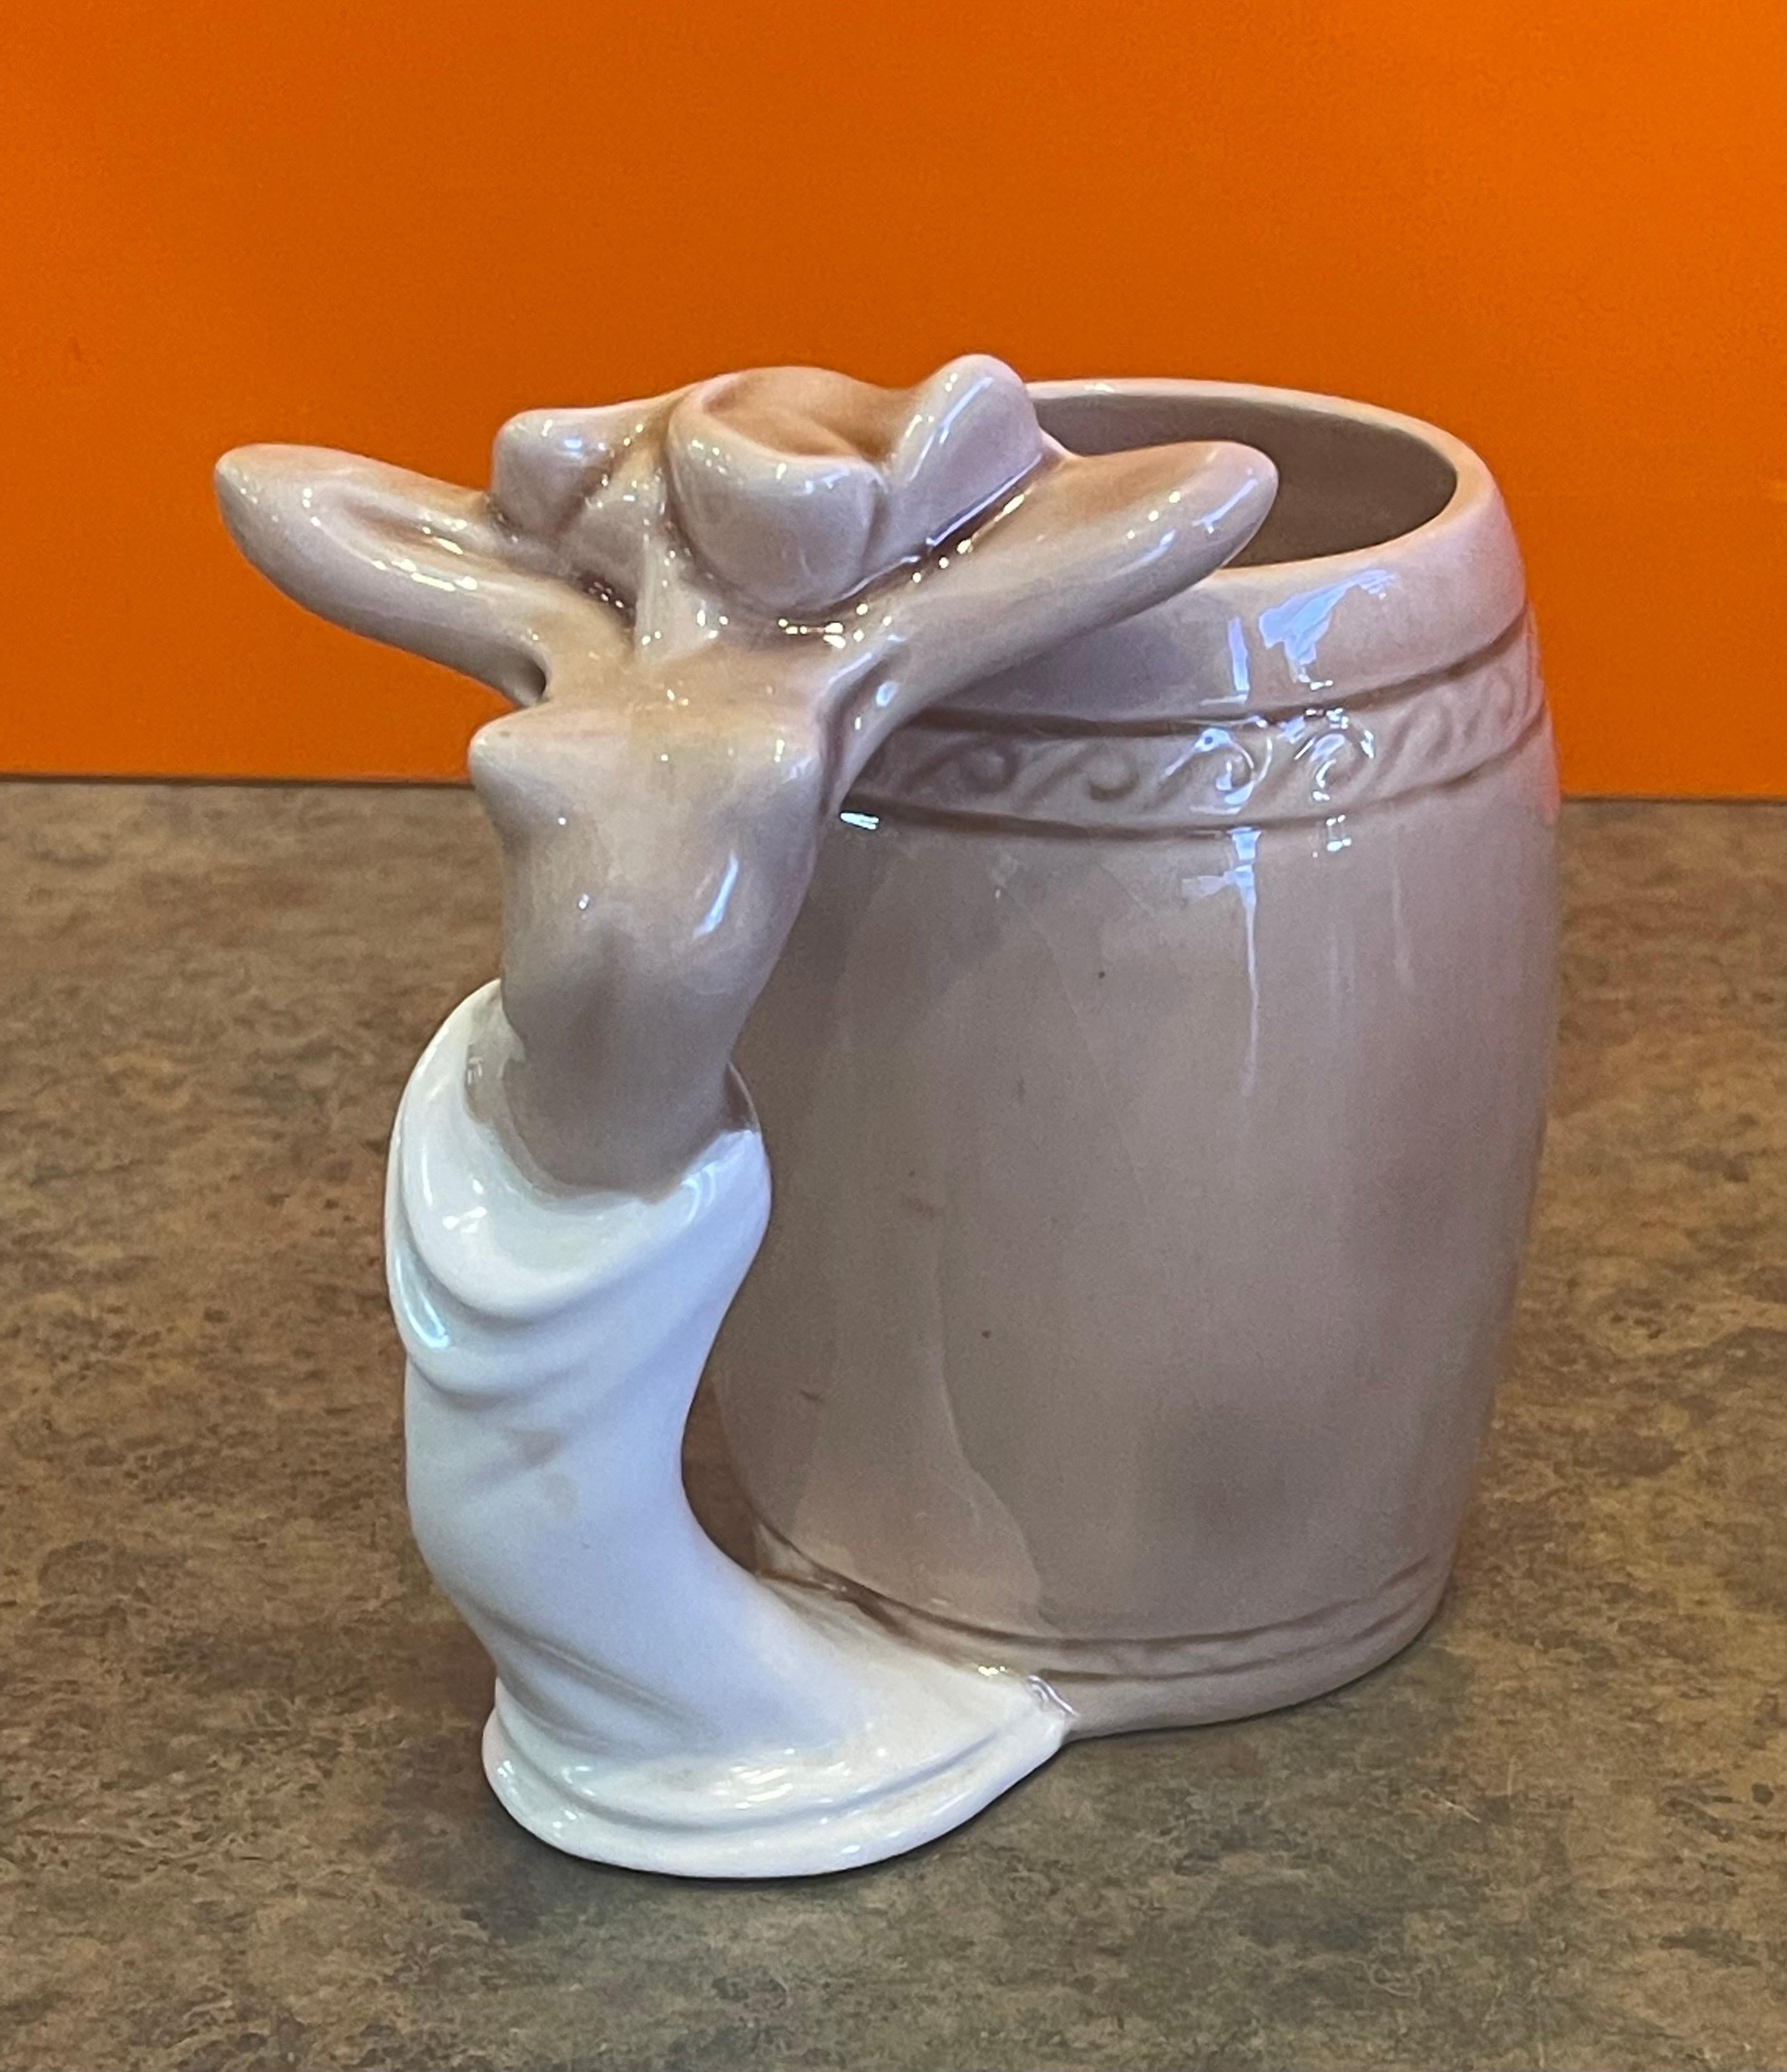 dorothy kindell ceramics